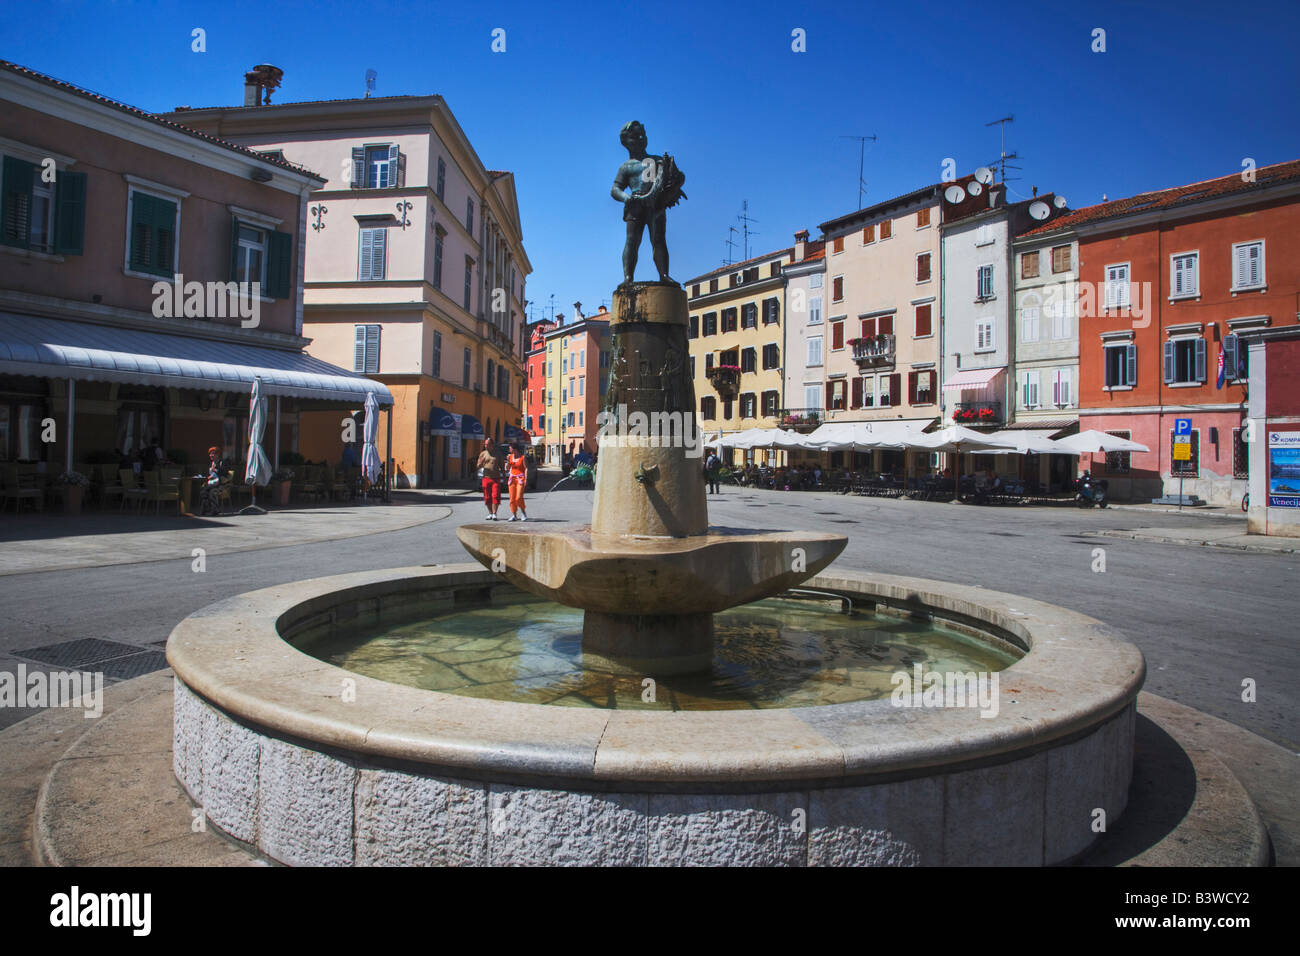 Fountain on the town square, Rovigno, Croatia Stock Photo